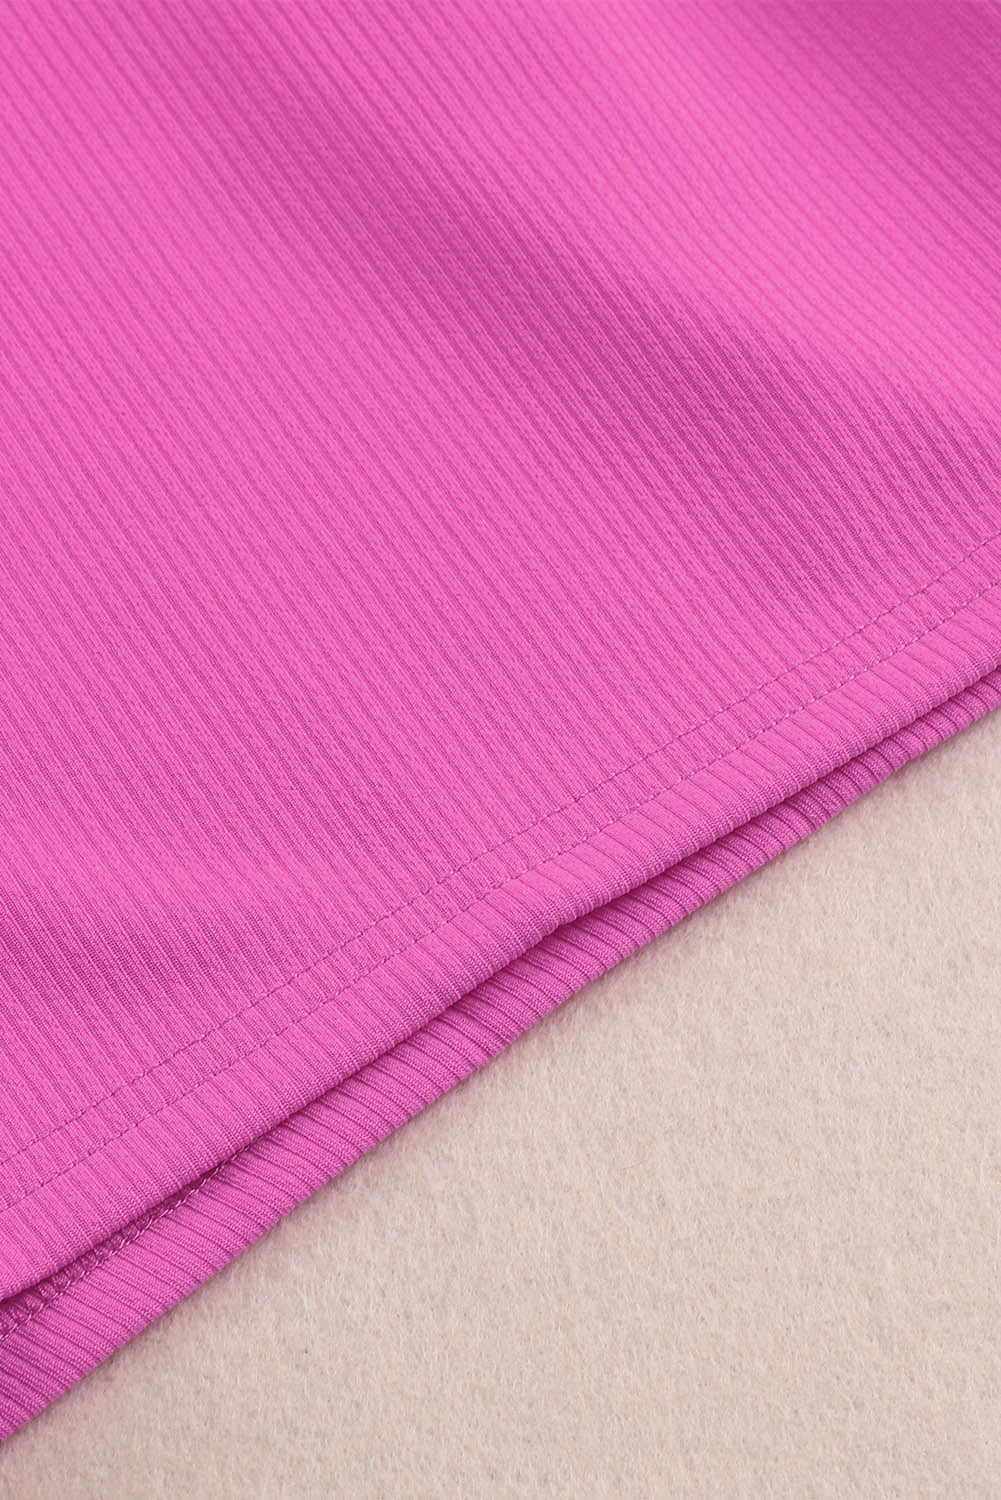 Rose Rib Knitted Sleeveless Crop Top and Elastic Waist Shorts Set